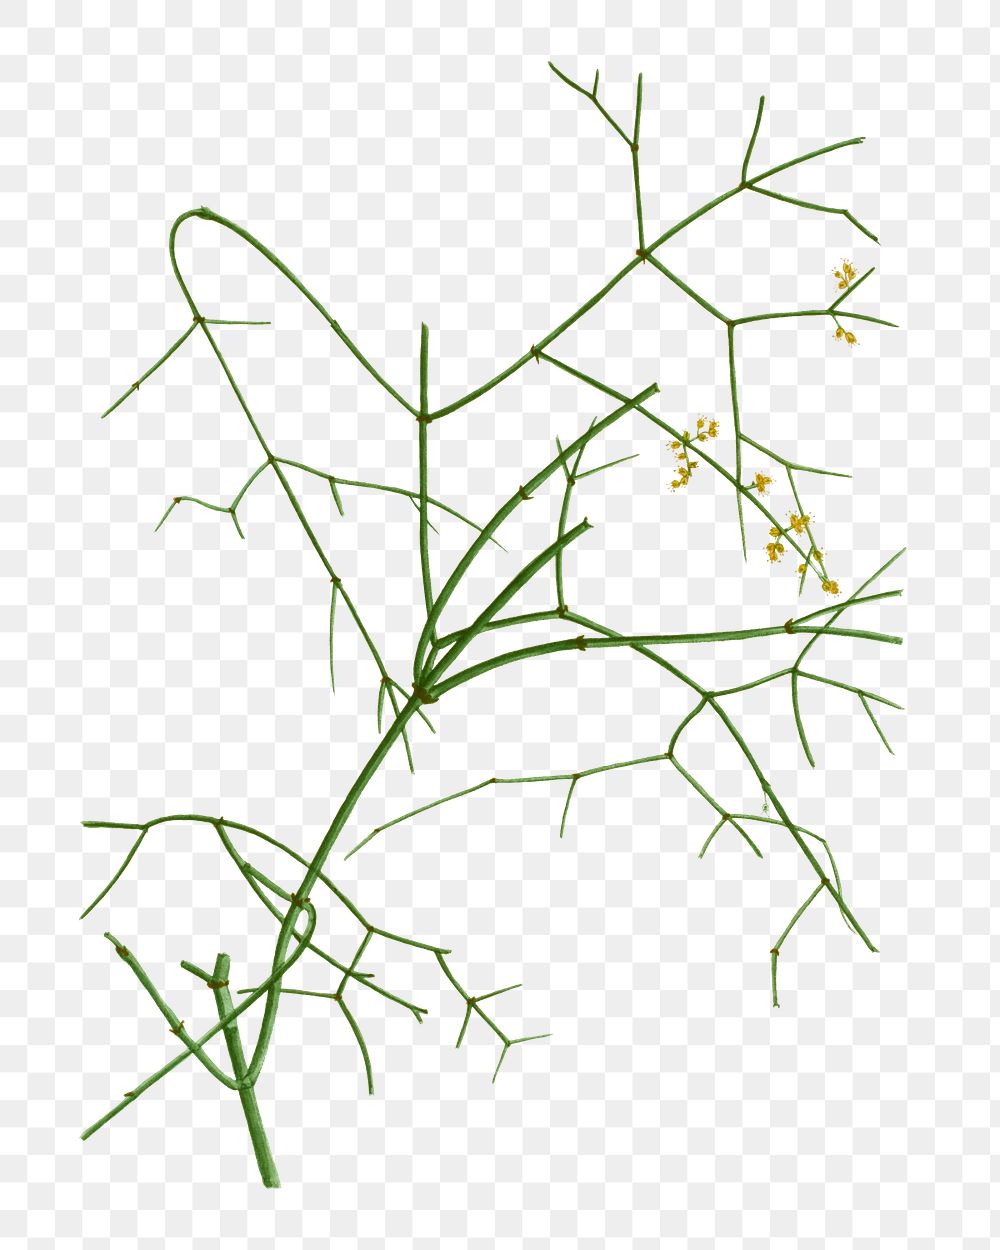 Ephedra altissima branch plant transparent png